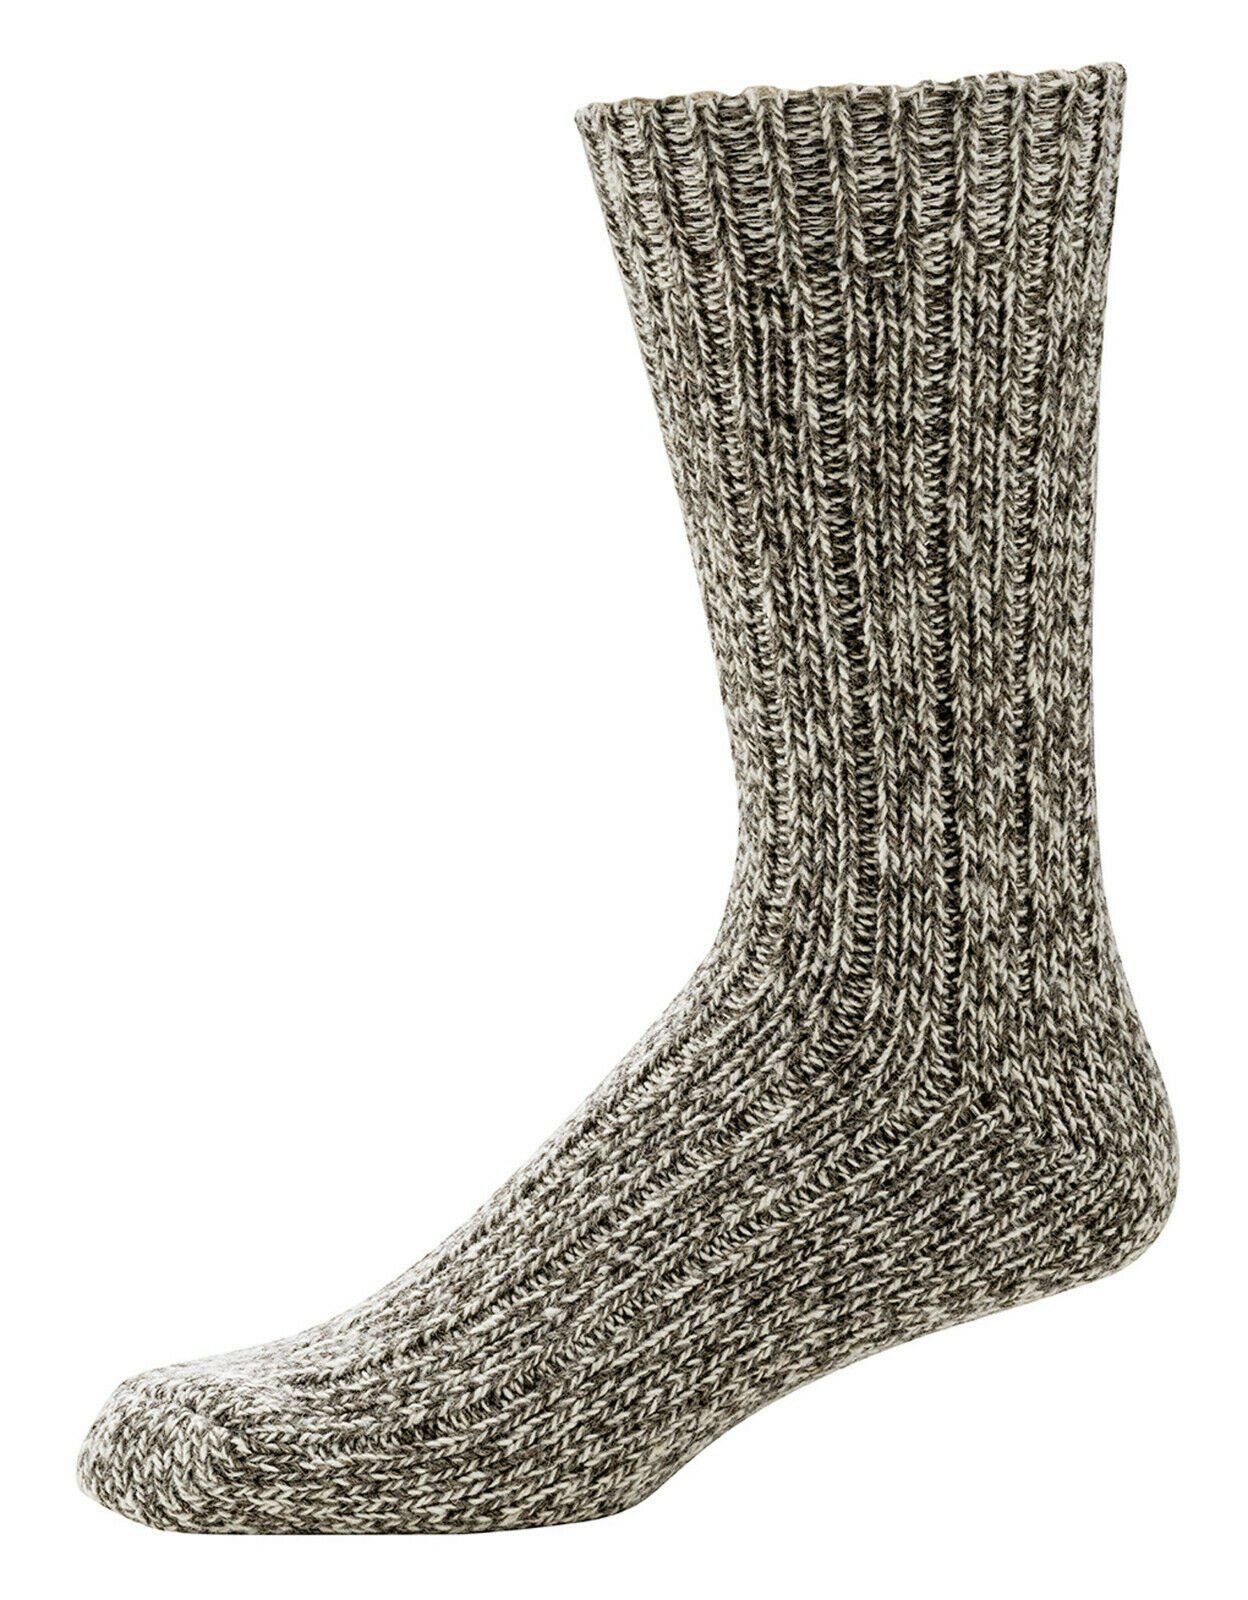 Wowerat Norwegersocken Warme Paar) weiche mit Baumwolle (3 Wolle Viskose Norweger Socken